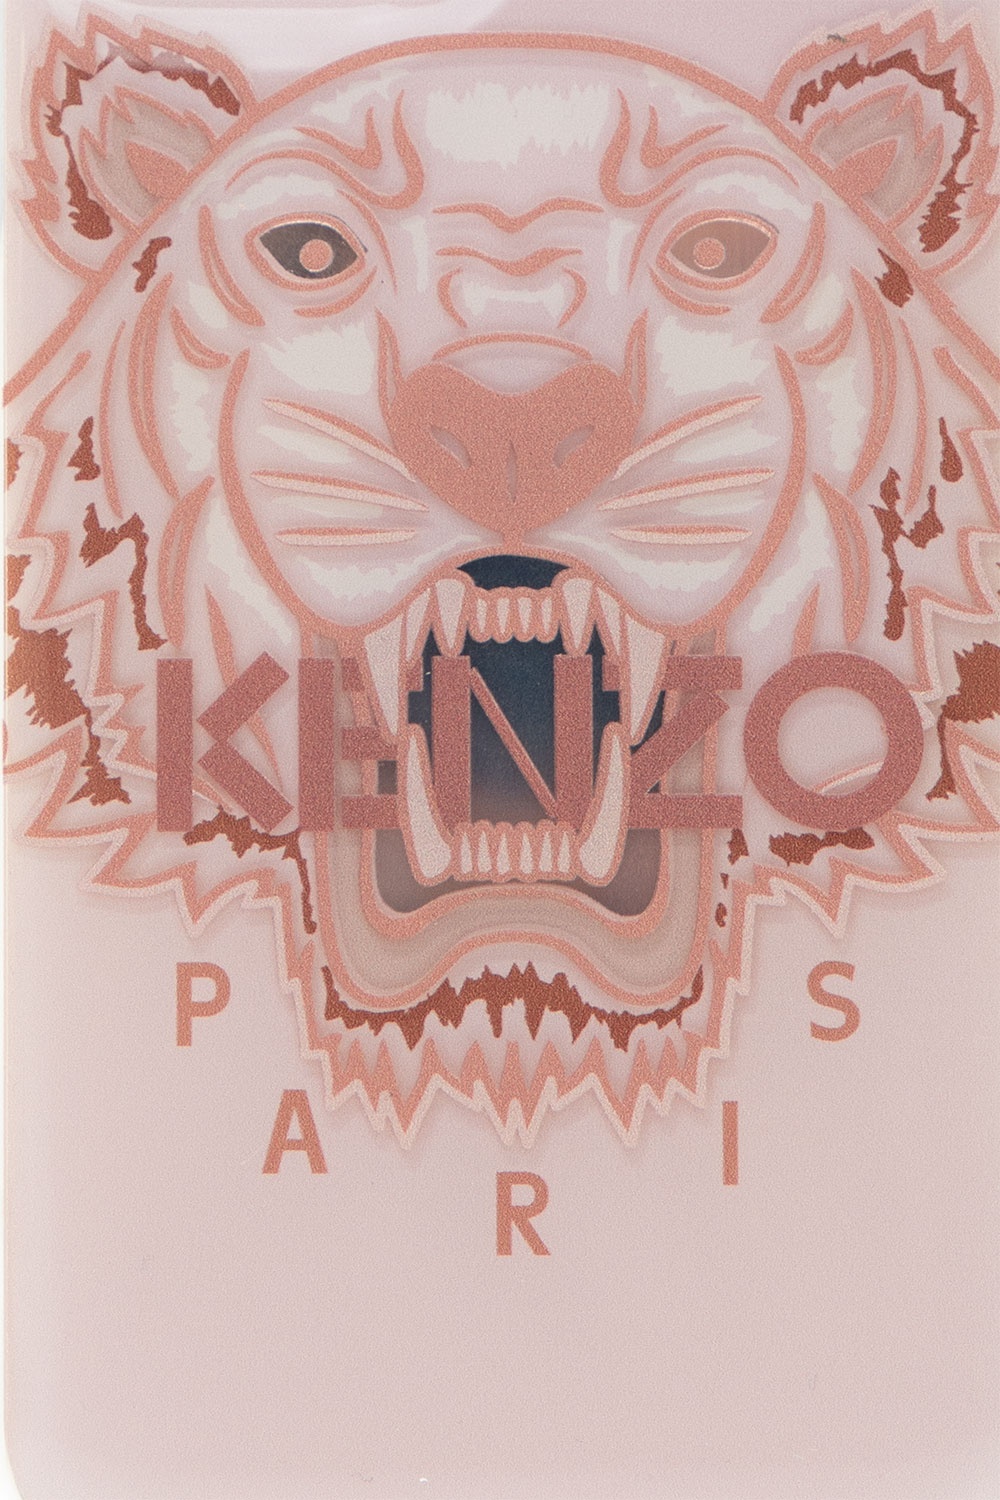 kenzo phone case pink